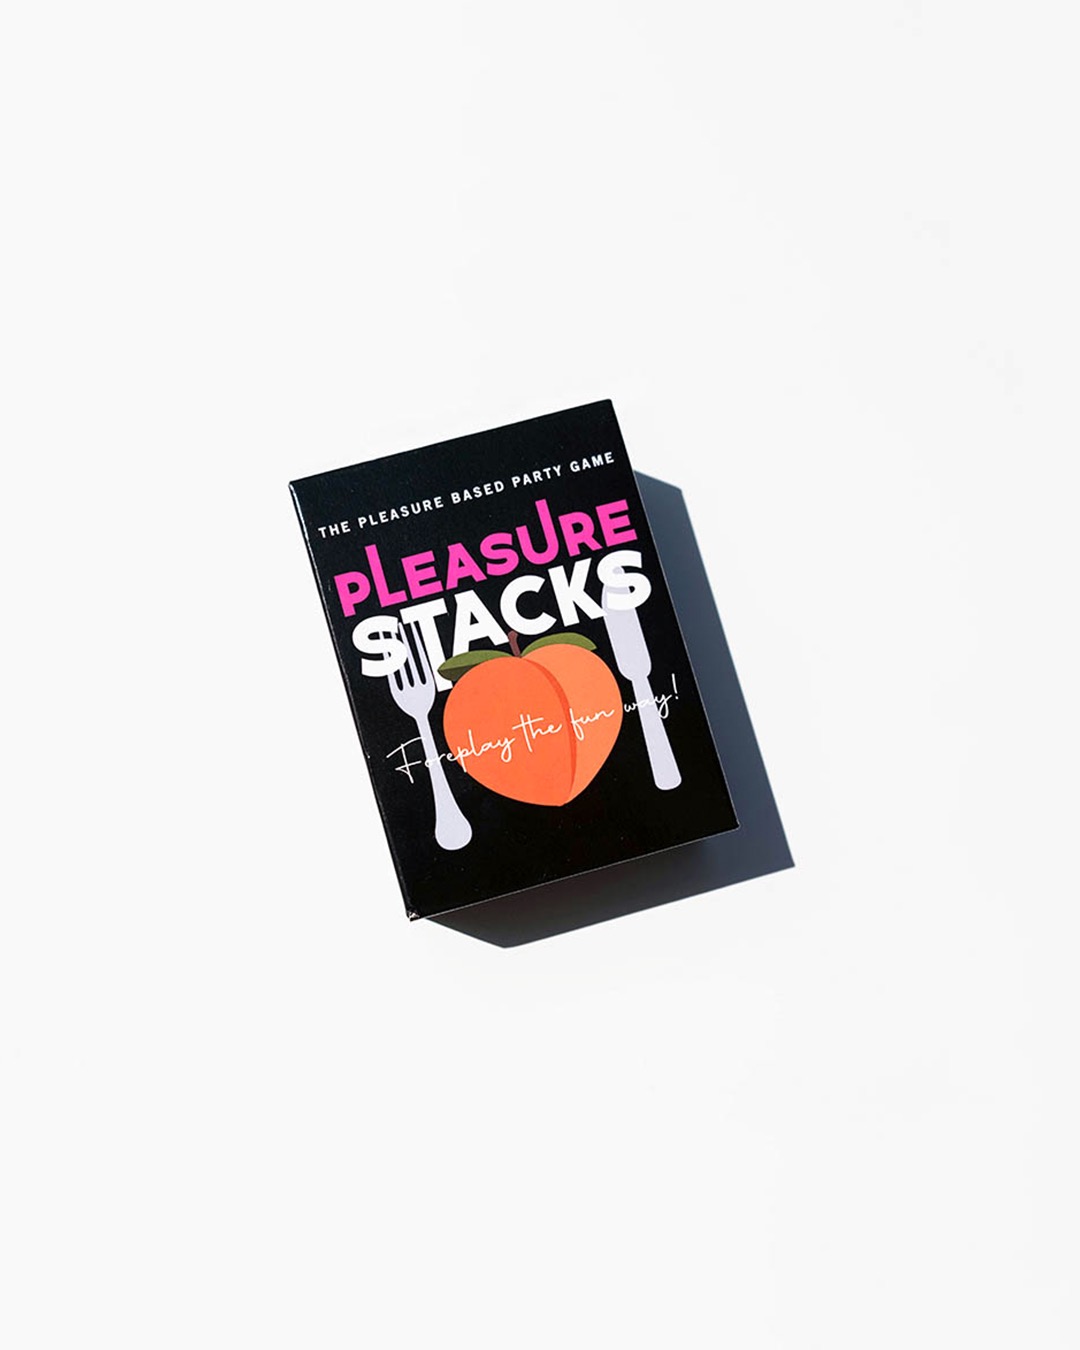 Pleasure Stacks – More than just card games!